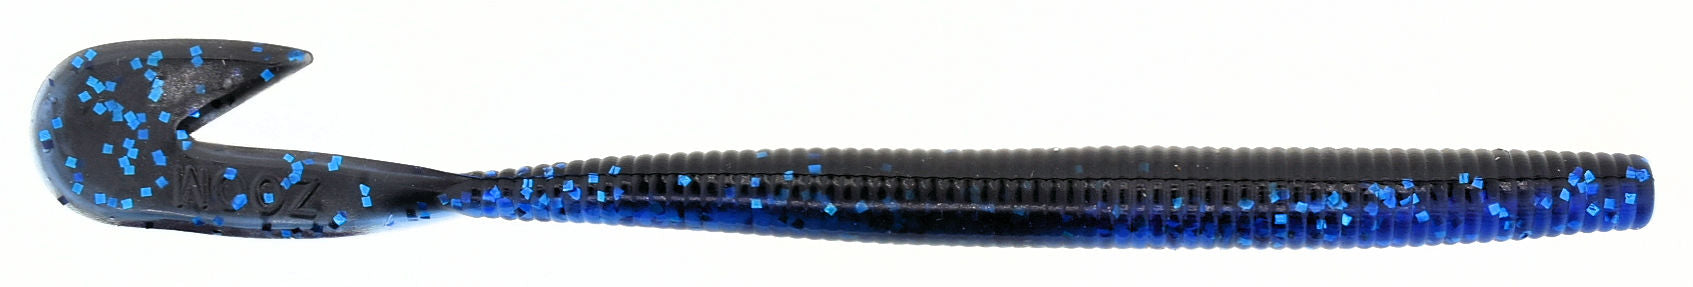 UV Speed Worm_Black Sapphire